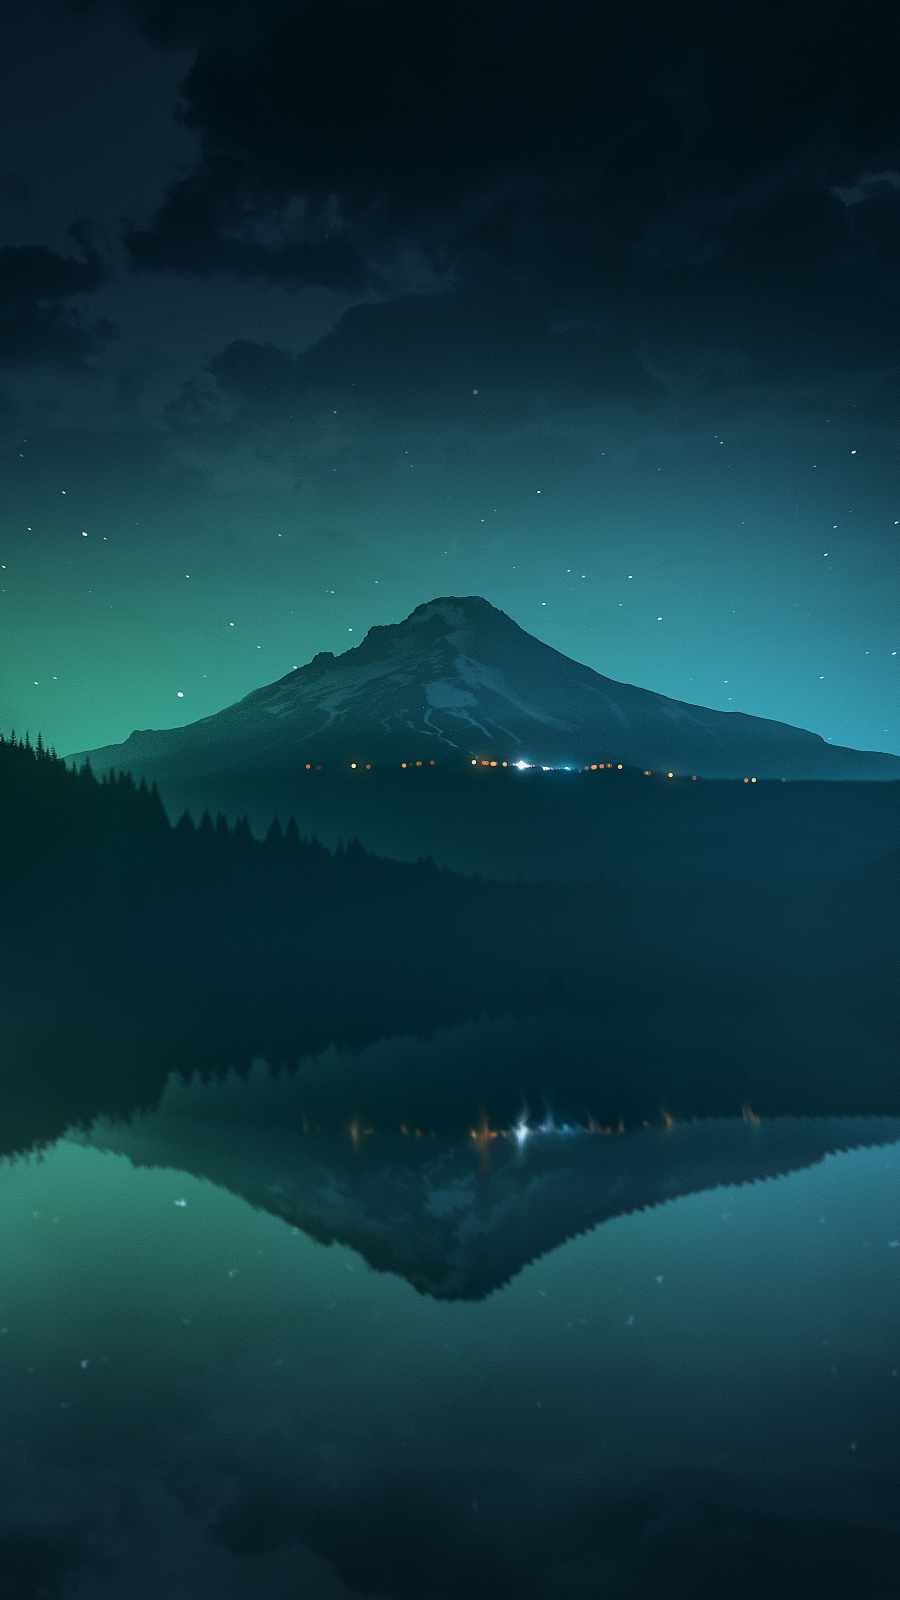 Night Lake Reflection iPhone Wallpaper